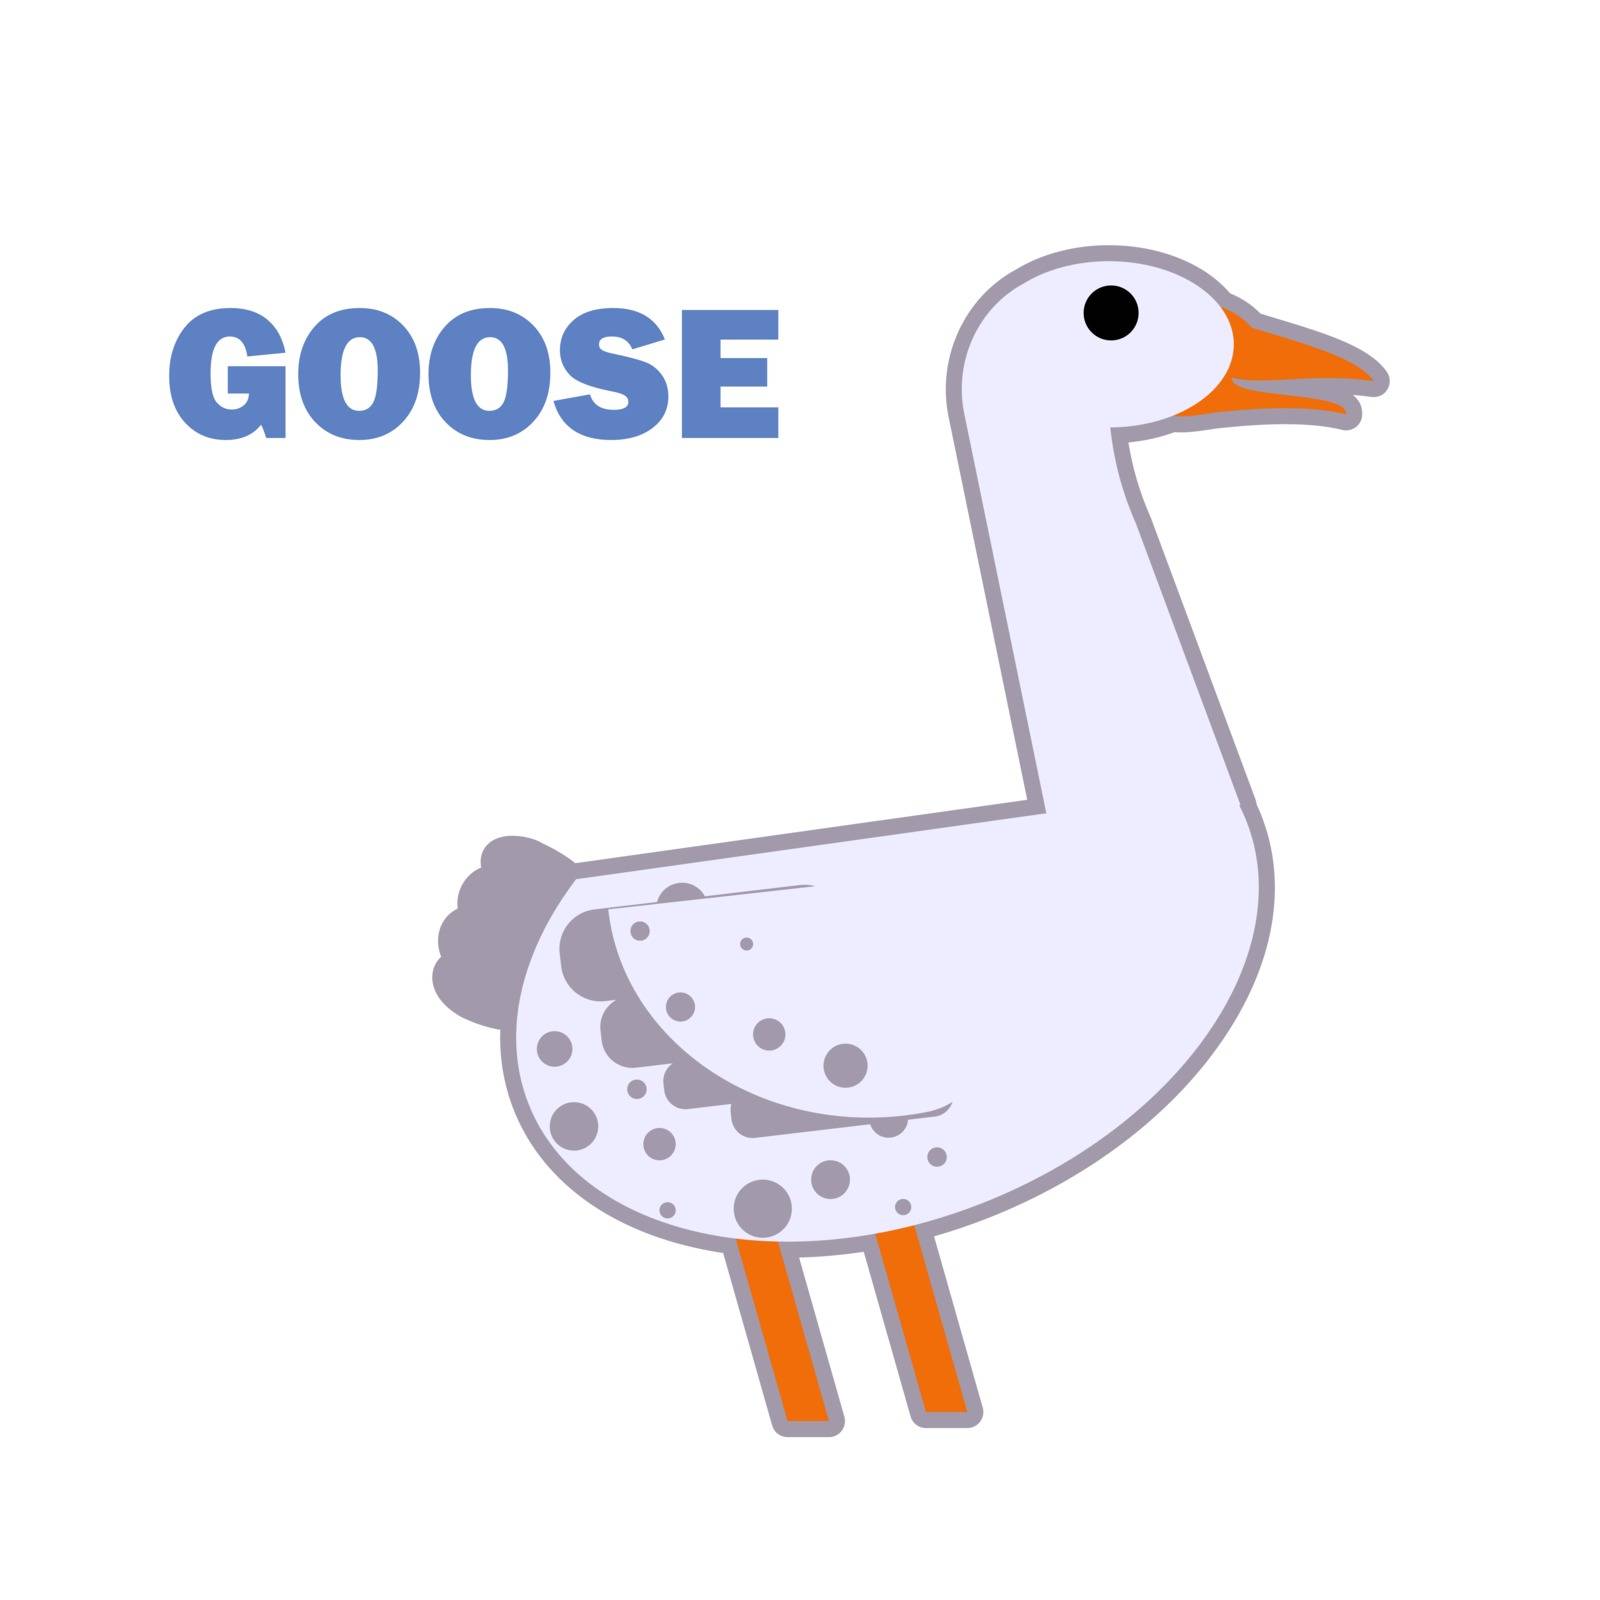 Domestic bird goose isolated by heliburcka